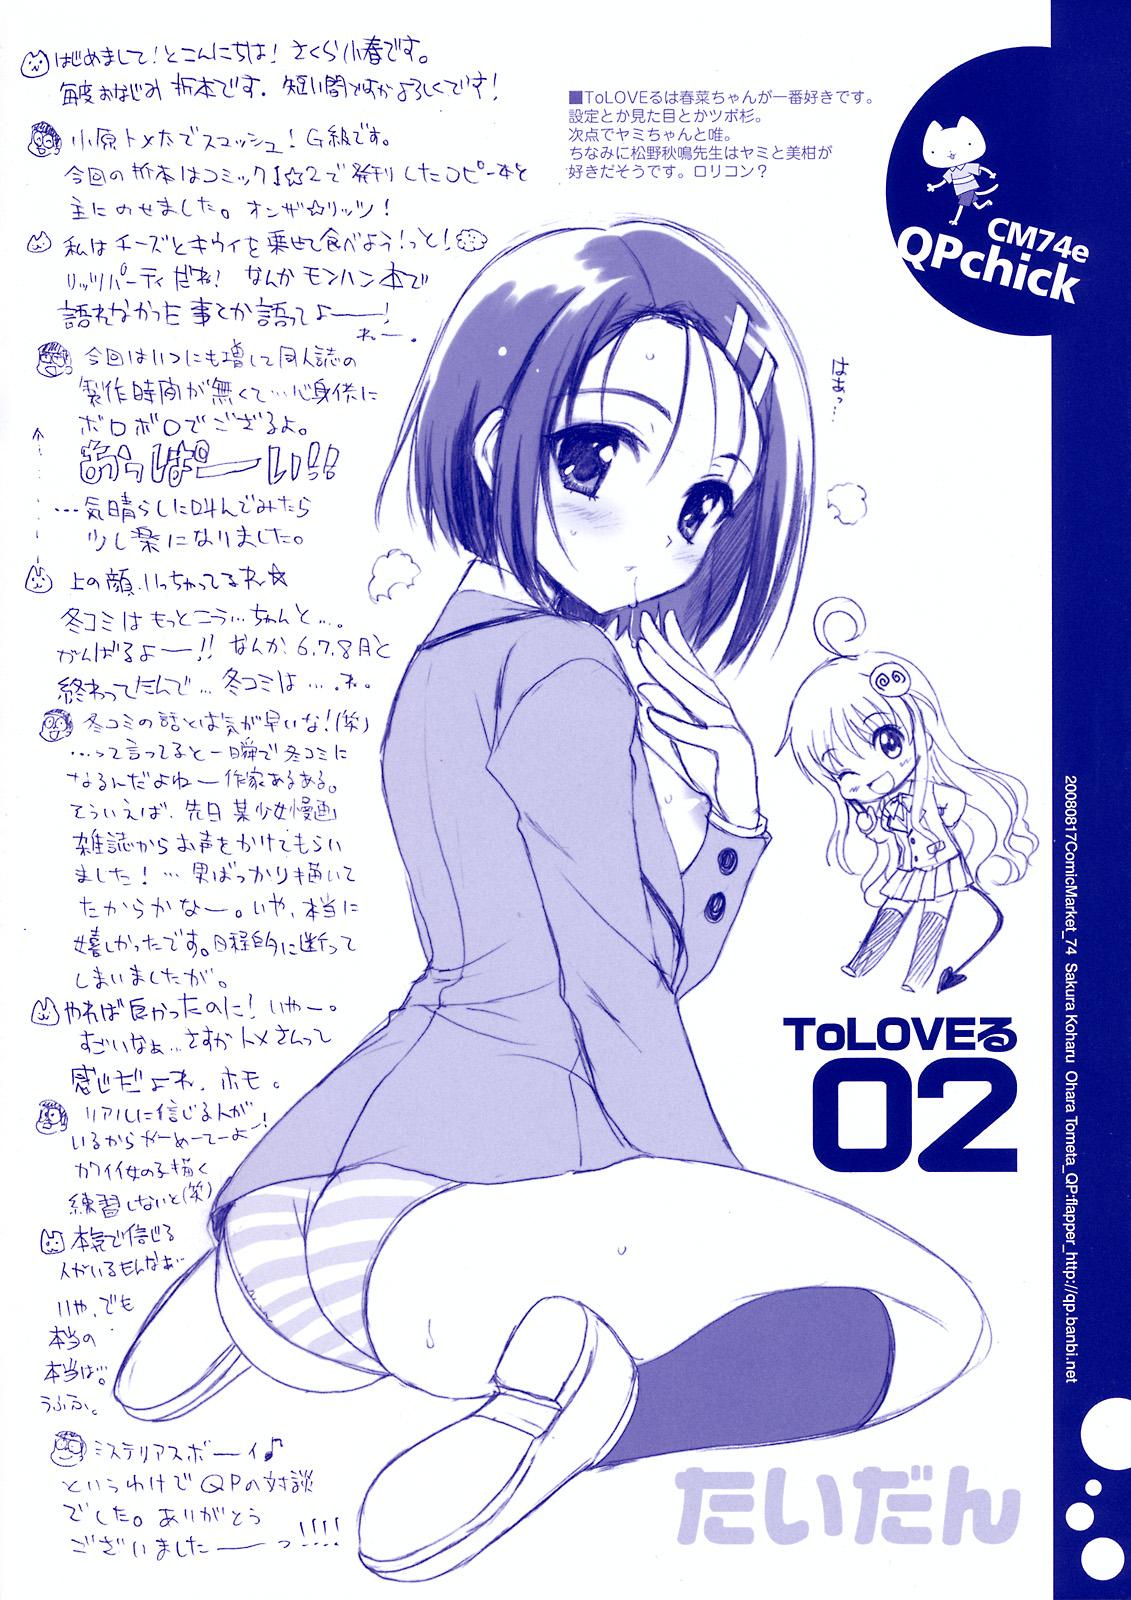 Filipina QPchickCM74e - Zero no tsukaima Stripping - Page 2